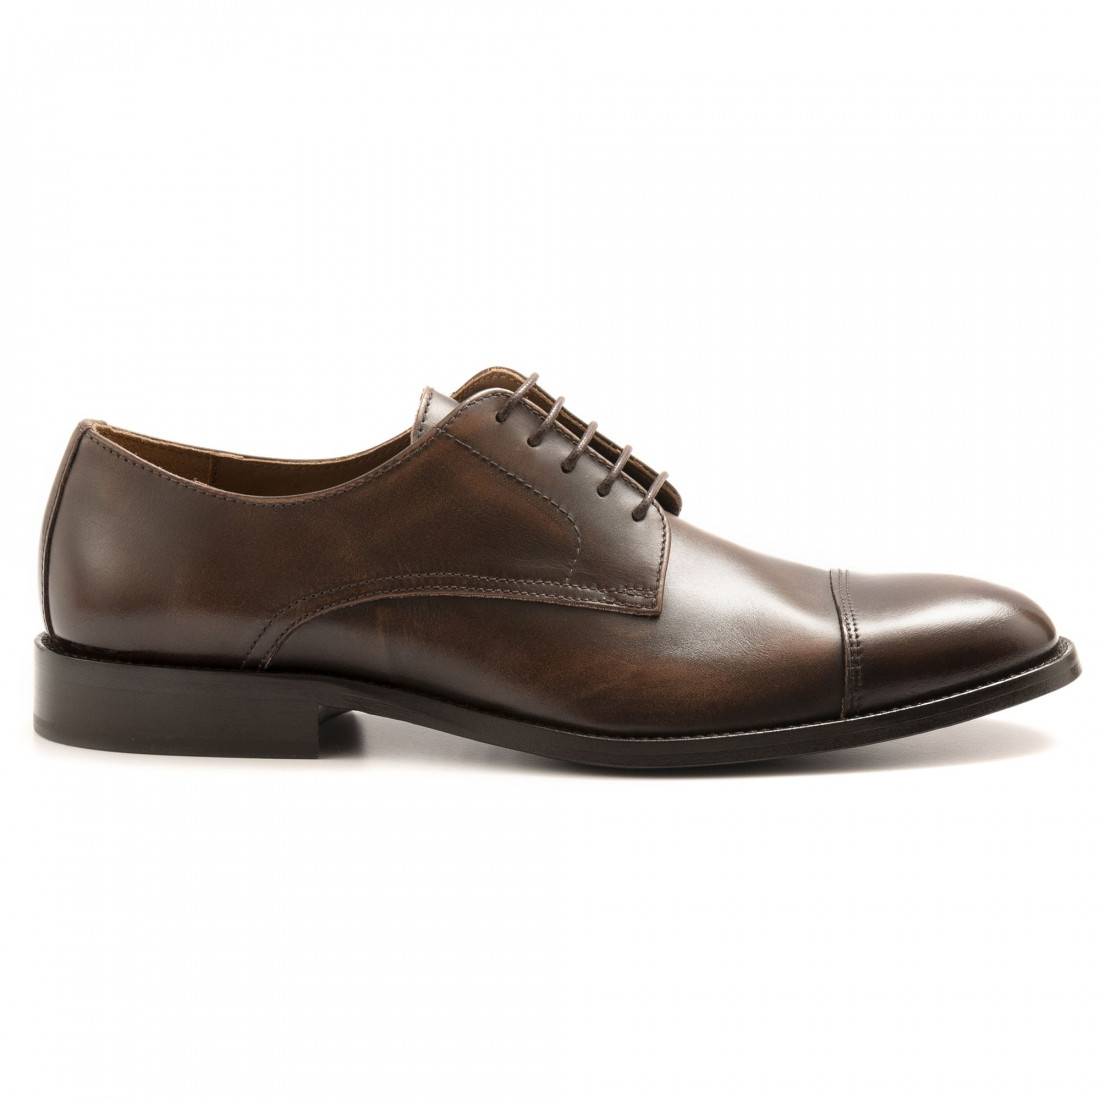 natuurlijk Vochtig verrader Men's Marco Ferretti derby shoes in brown leather